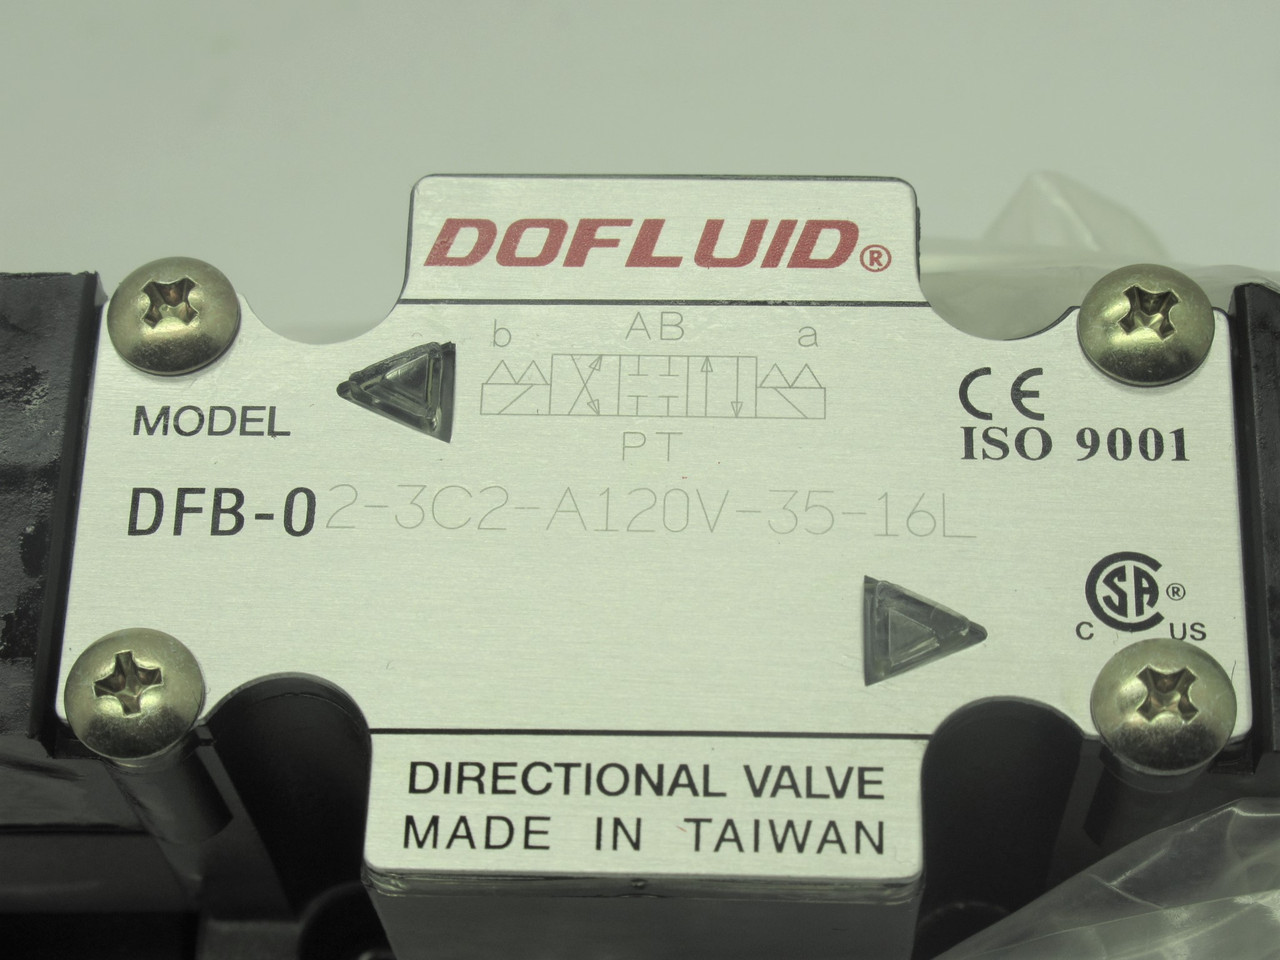 Dofluid DFB-02-3C2-A120V-35-16L Directional Control Valve 120VAC 50/60Hz NEW